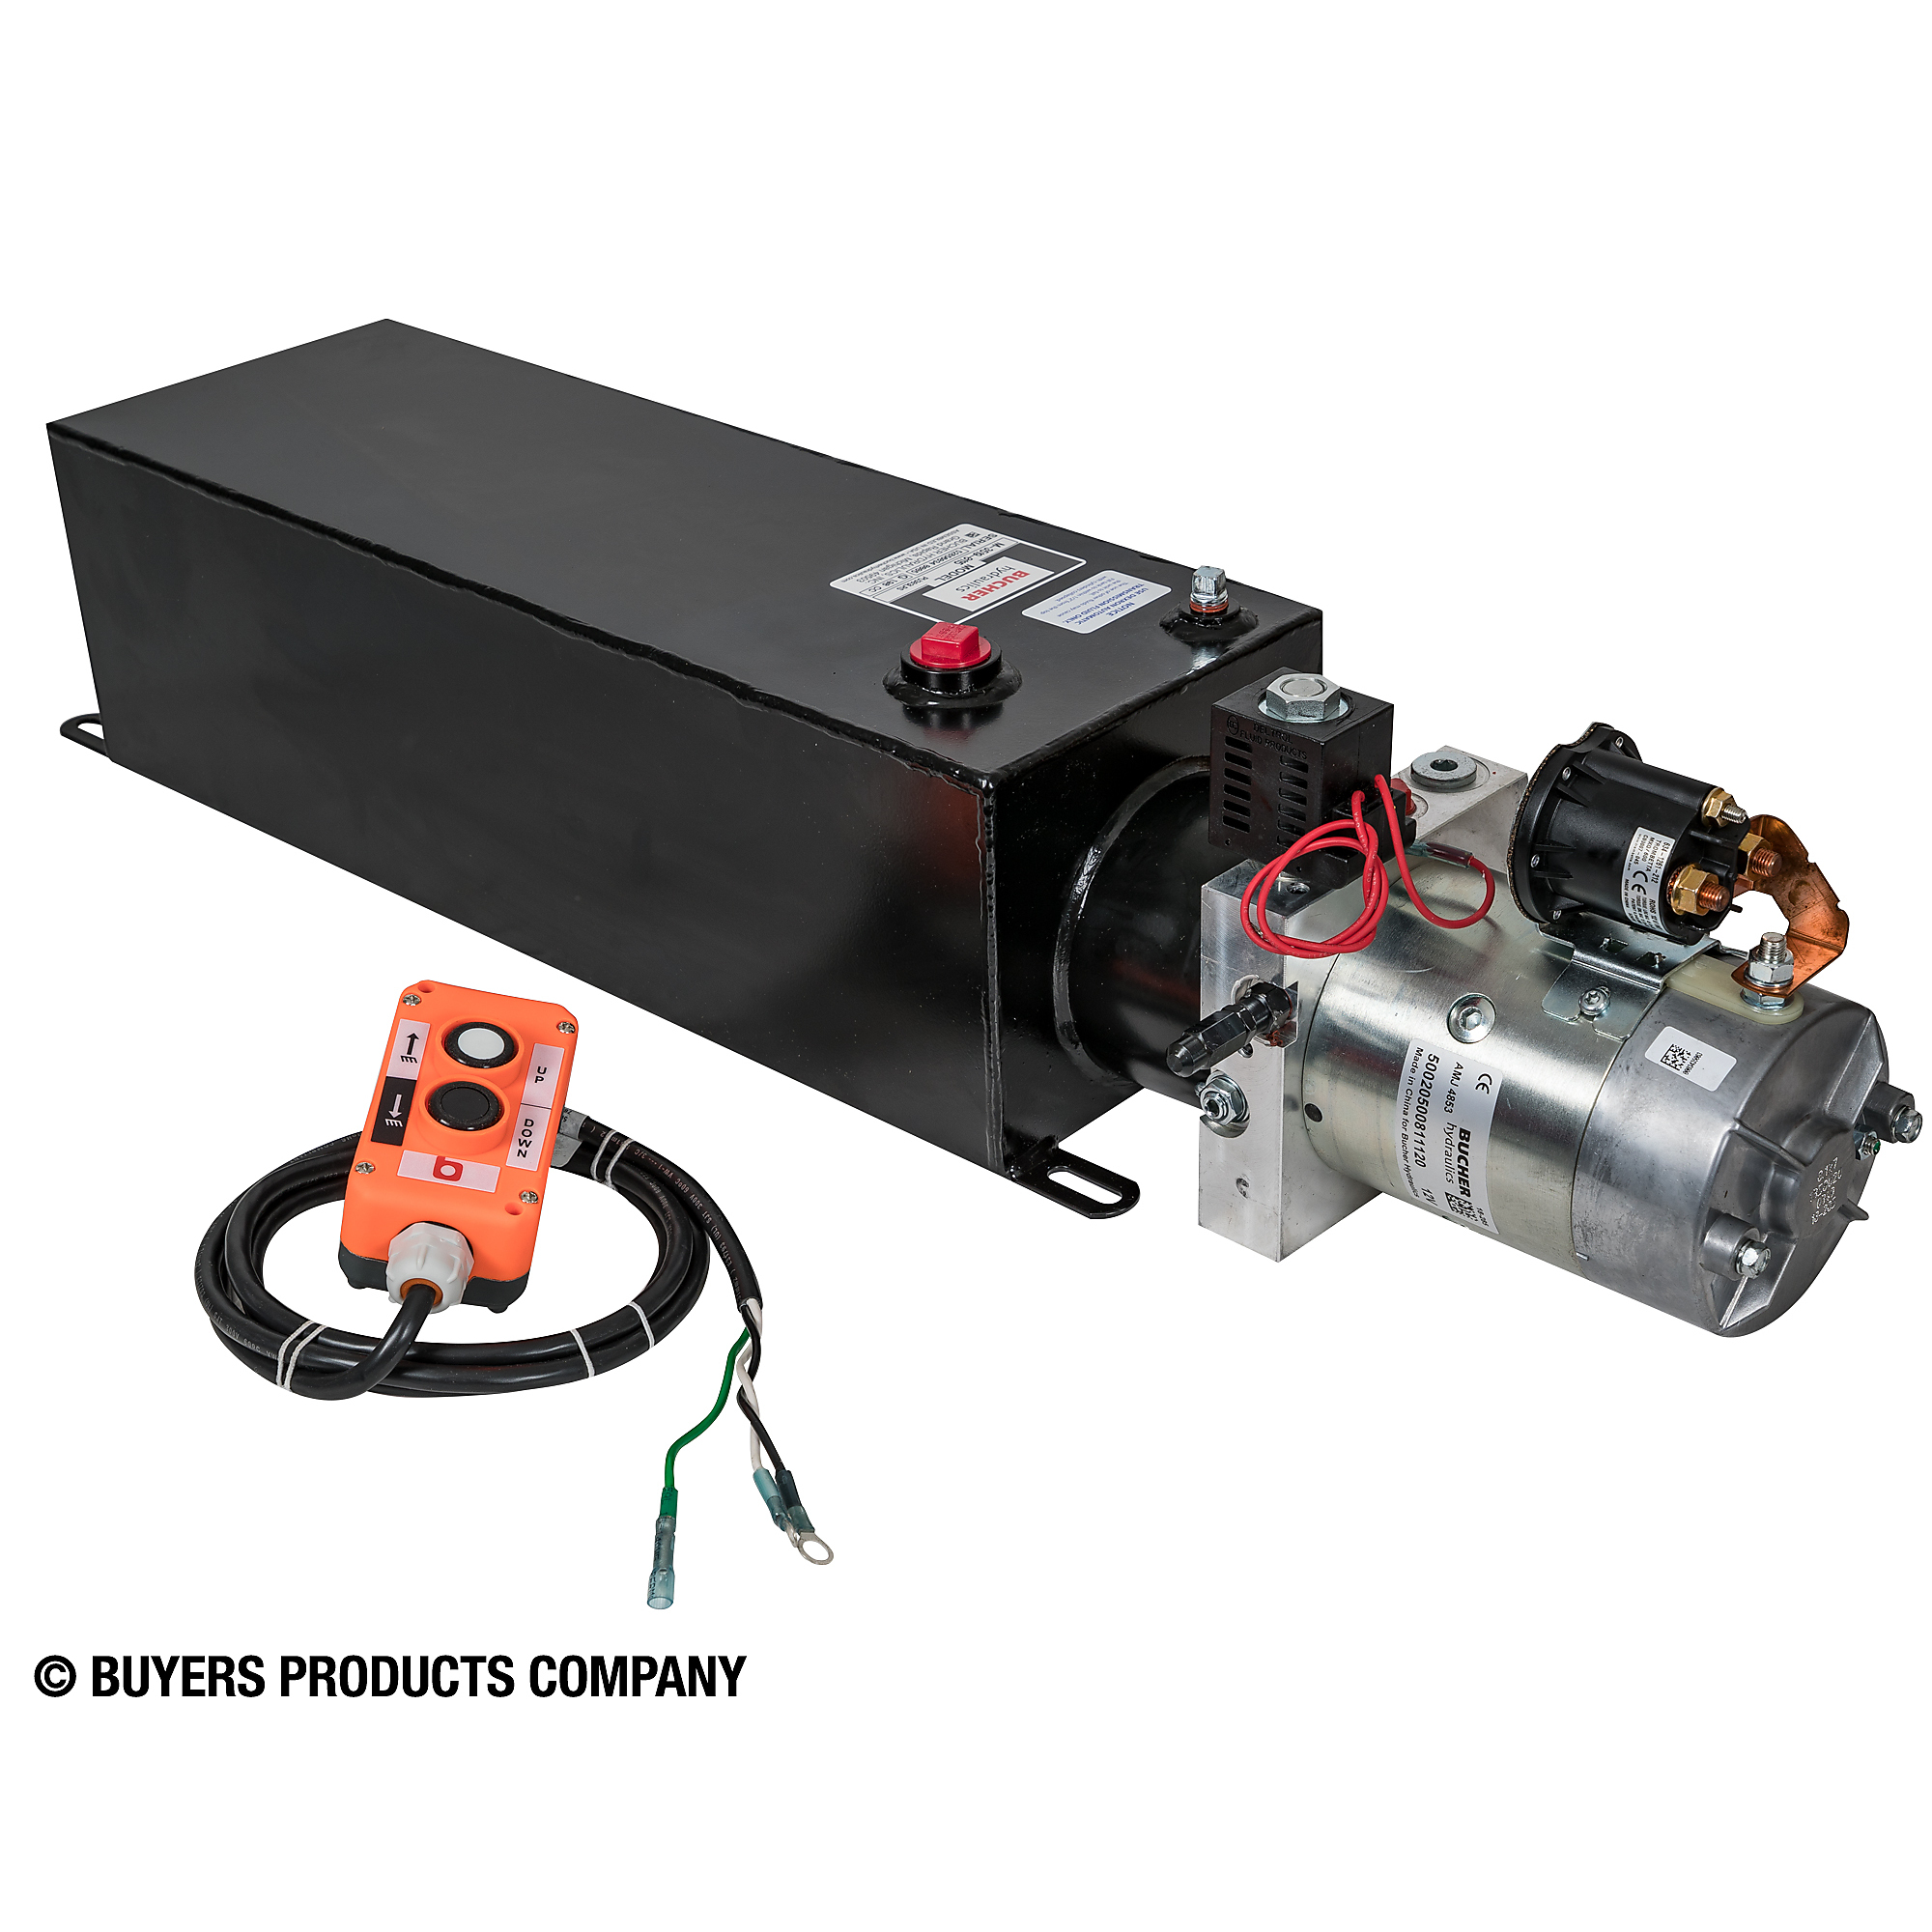 Steel Reservoir Power Unit, Max. PSI 2500, Max. RPM 0, Model - Buyers Products PU303LRS